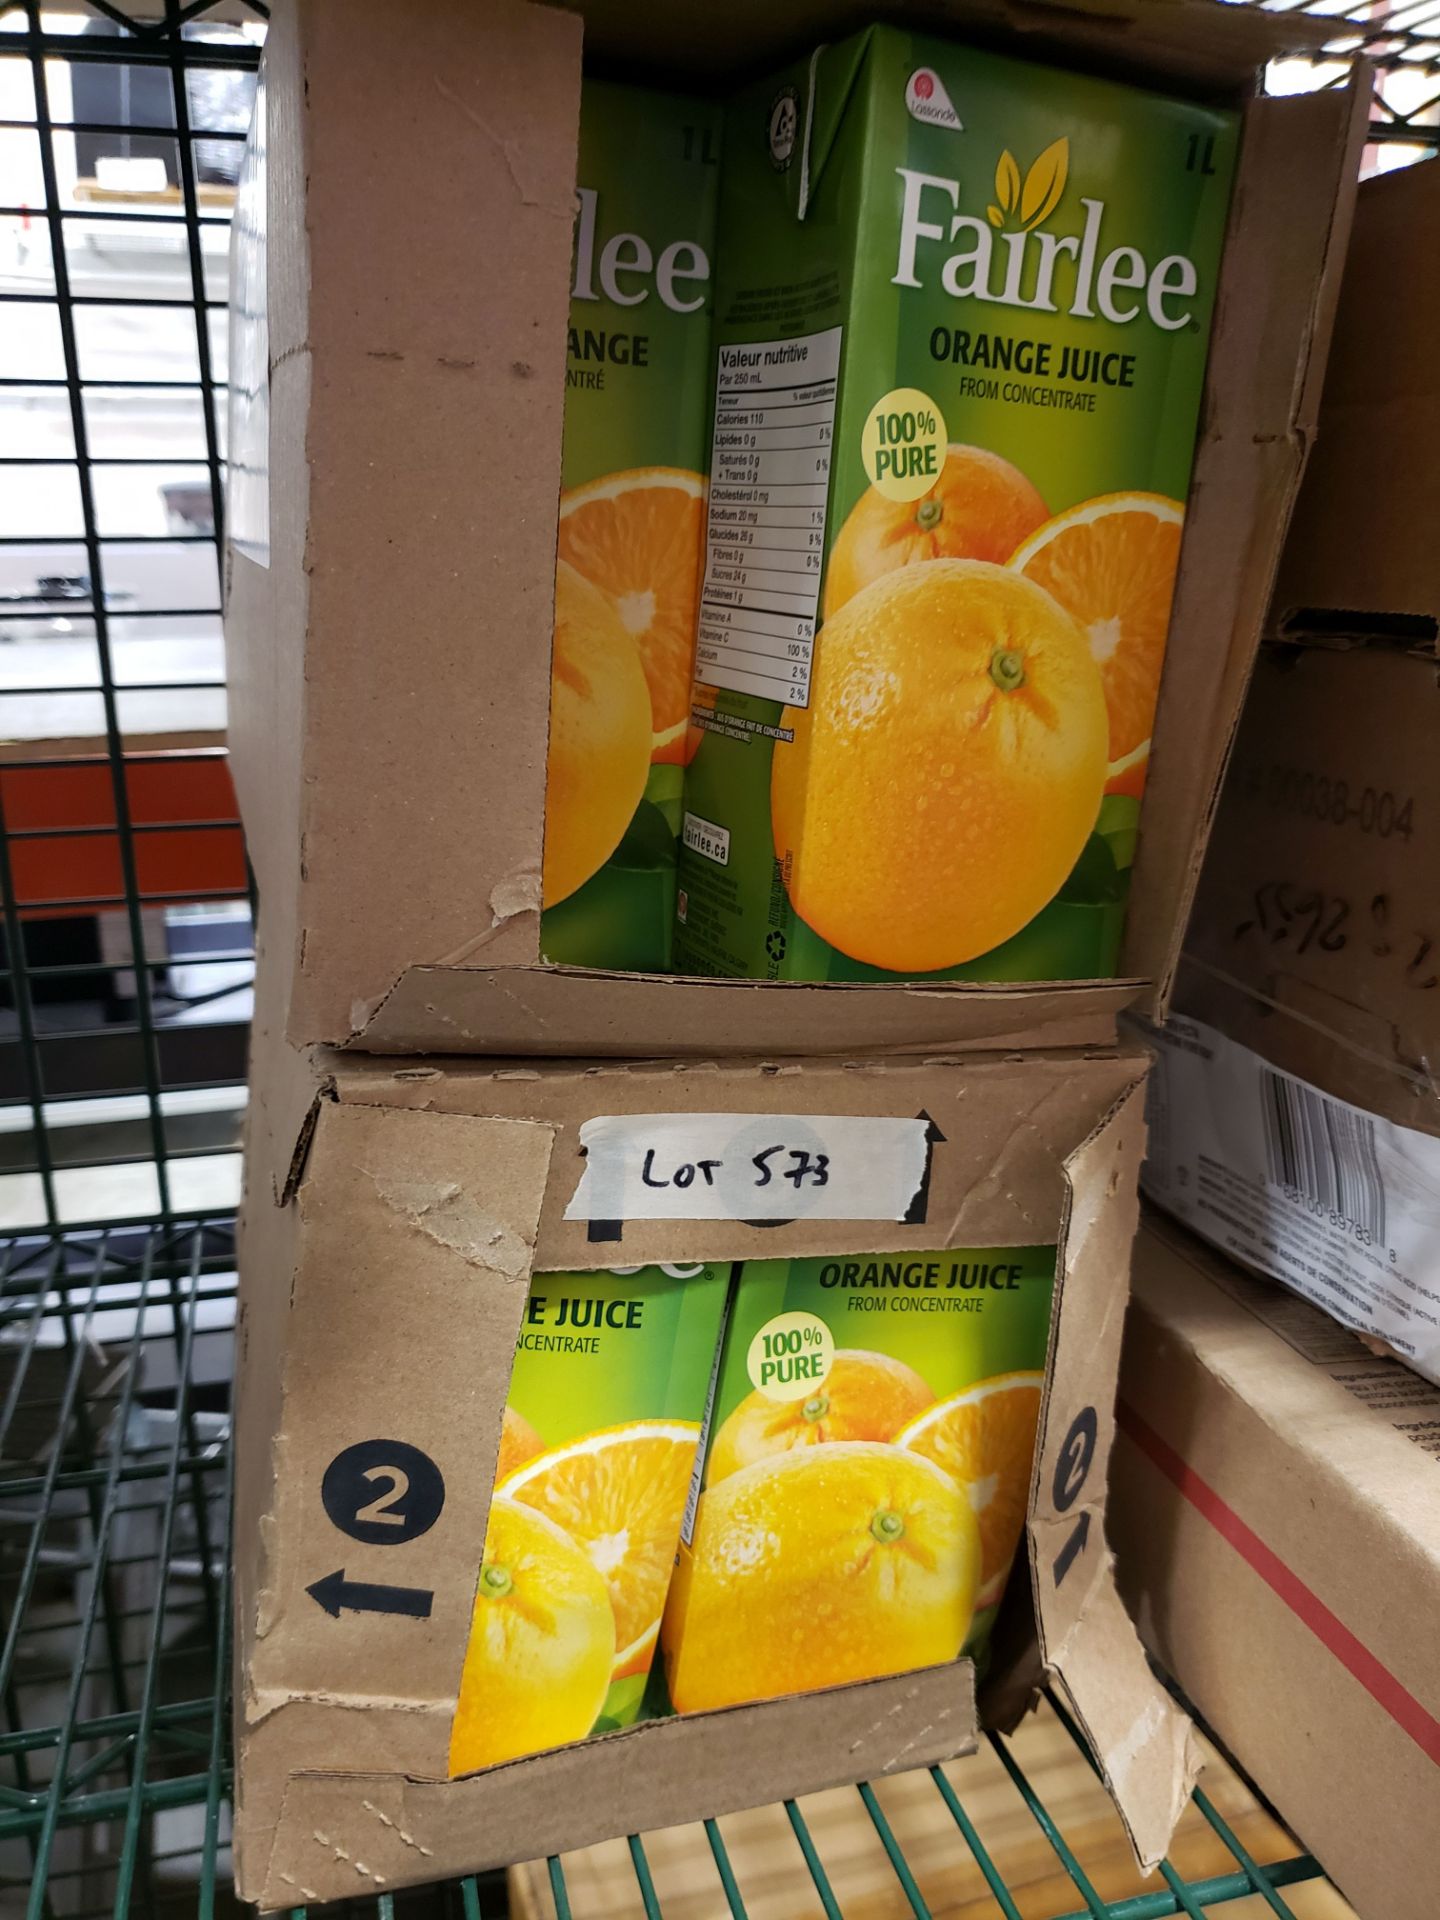 Fairlee Orange Juice - 23 x 1lt Cartons - Image 2 of 2